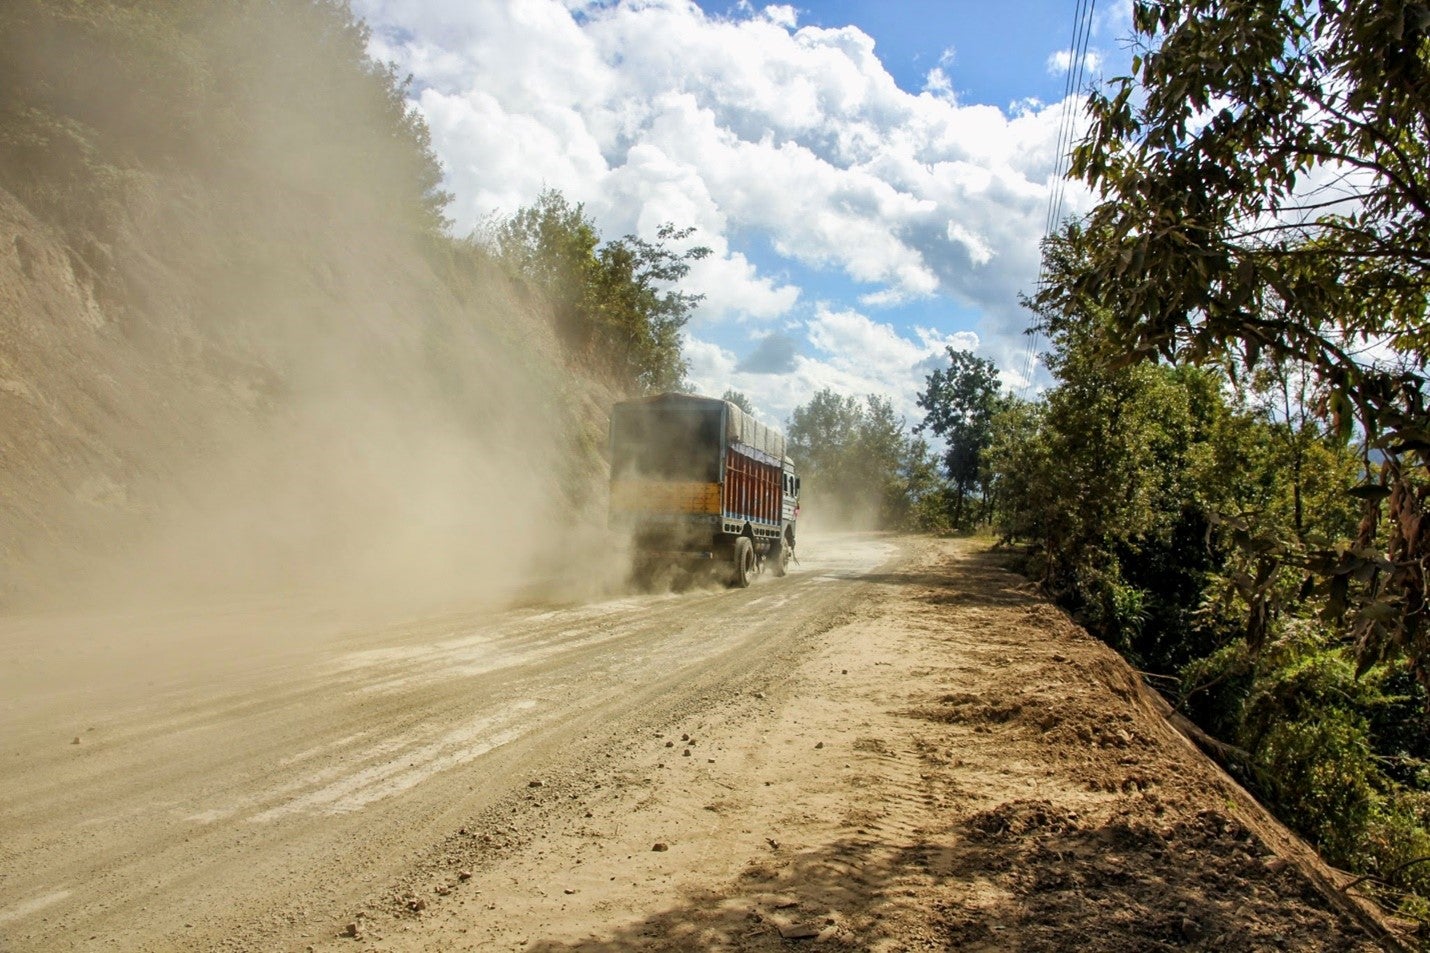 A truck moving on a dusty road in Northeast India. Photo: Srinivasan Balaji/ Shutterstock 